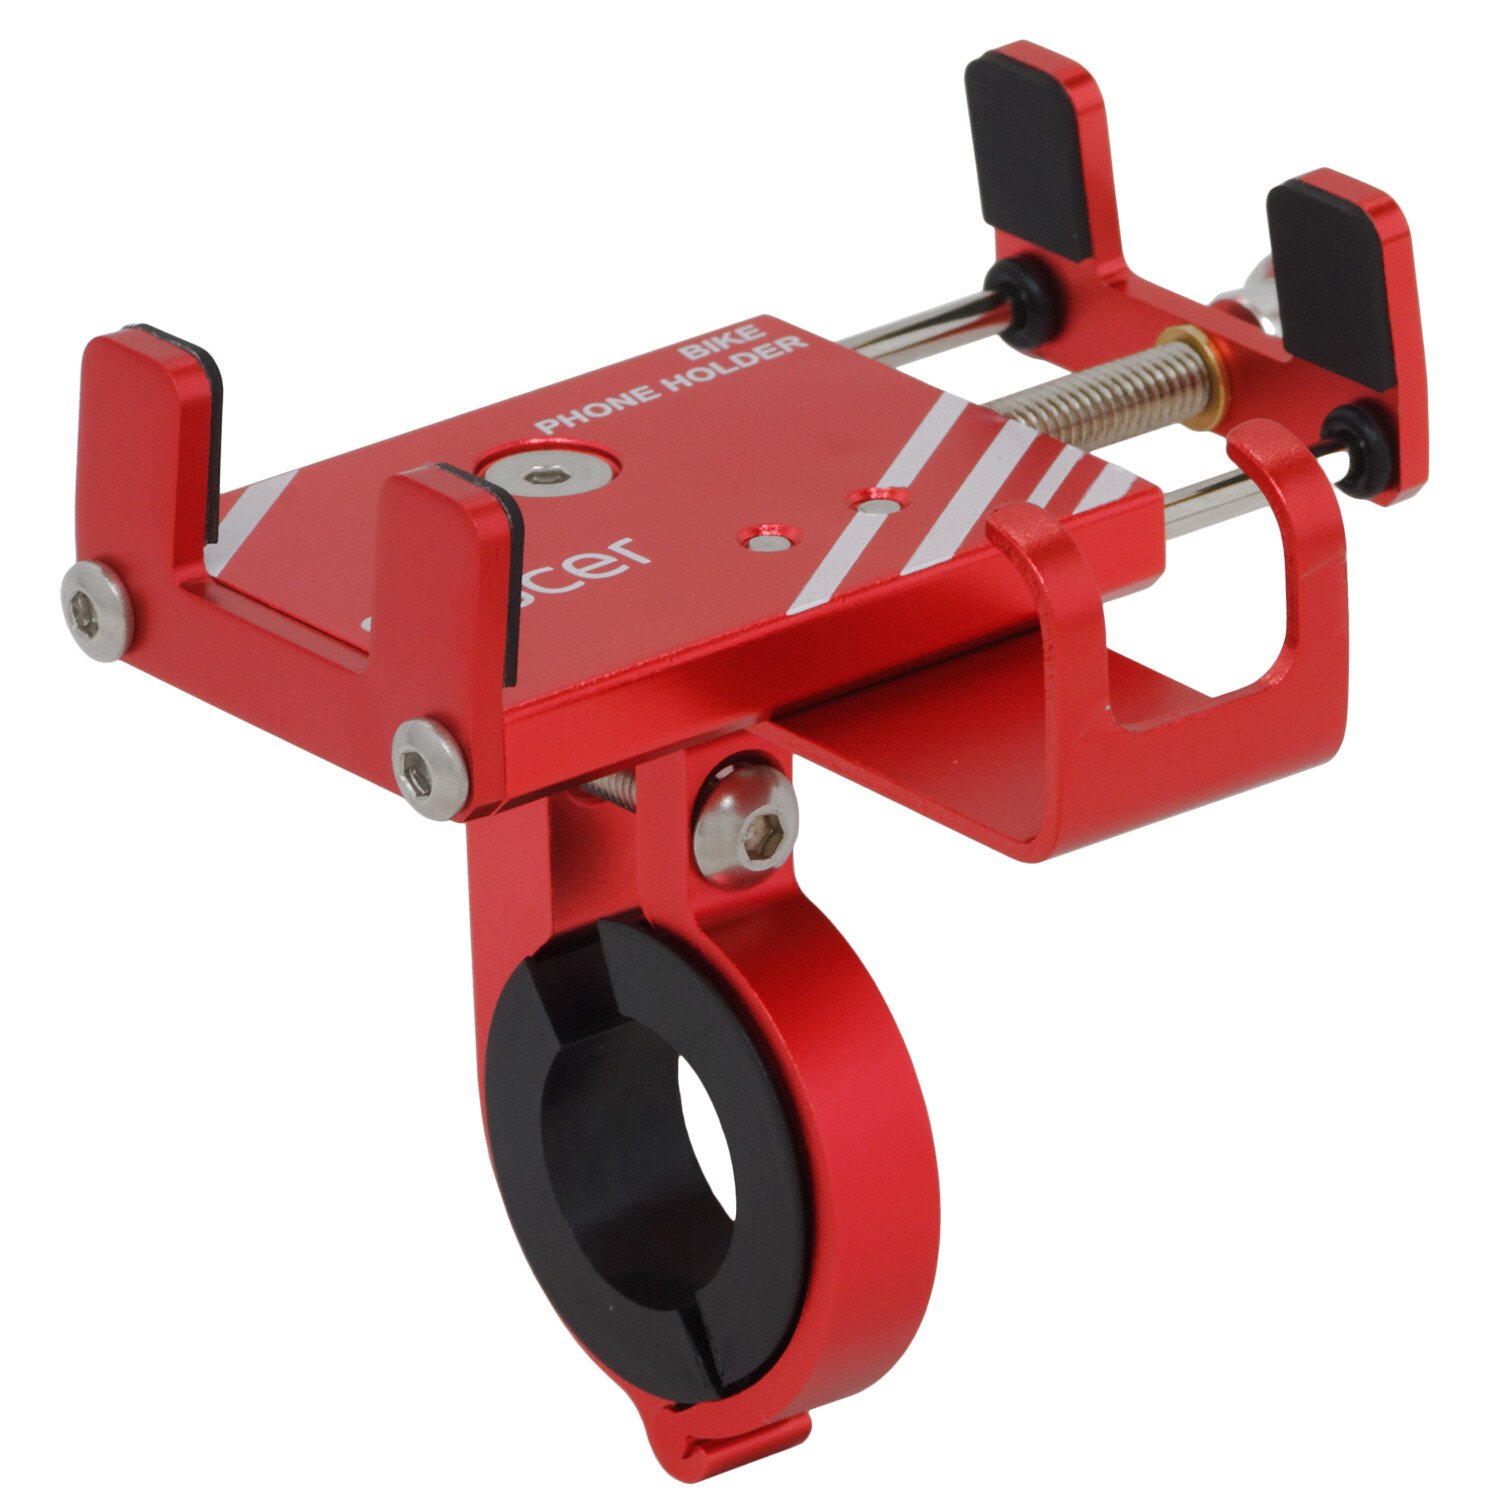 SUPORT Bicicleta SPACER pt. SmartPhone, fixare de ghidon, Metalic, rosu, cheie de montare,  "SPBH-METAL-RED" thumb